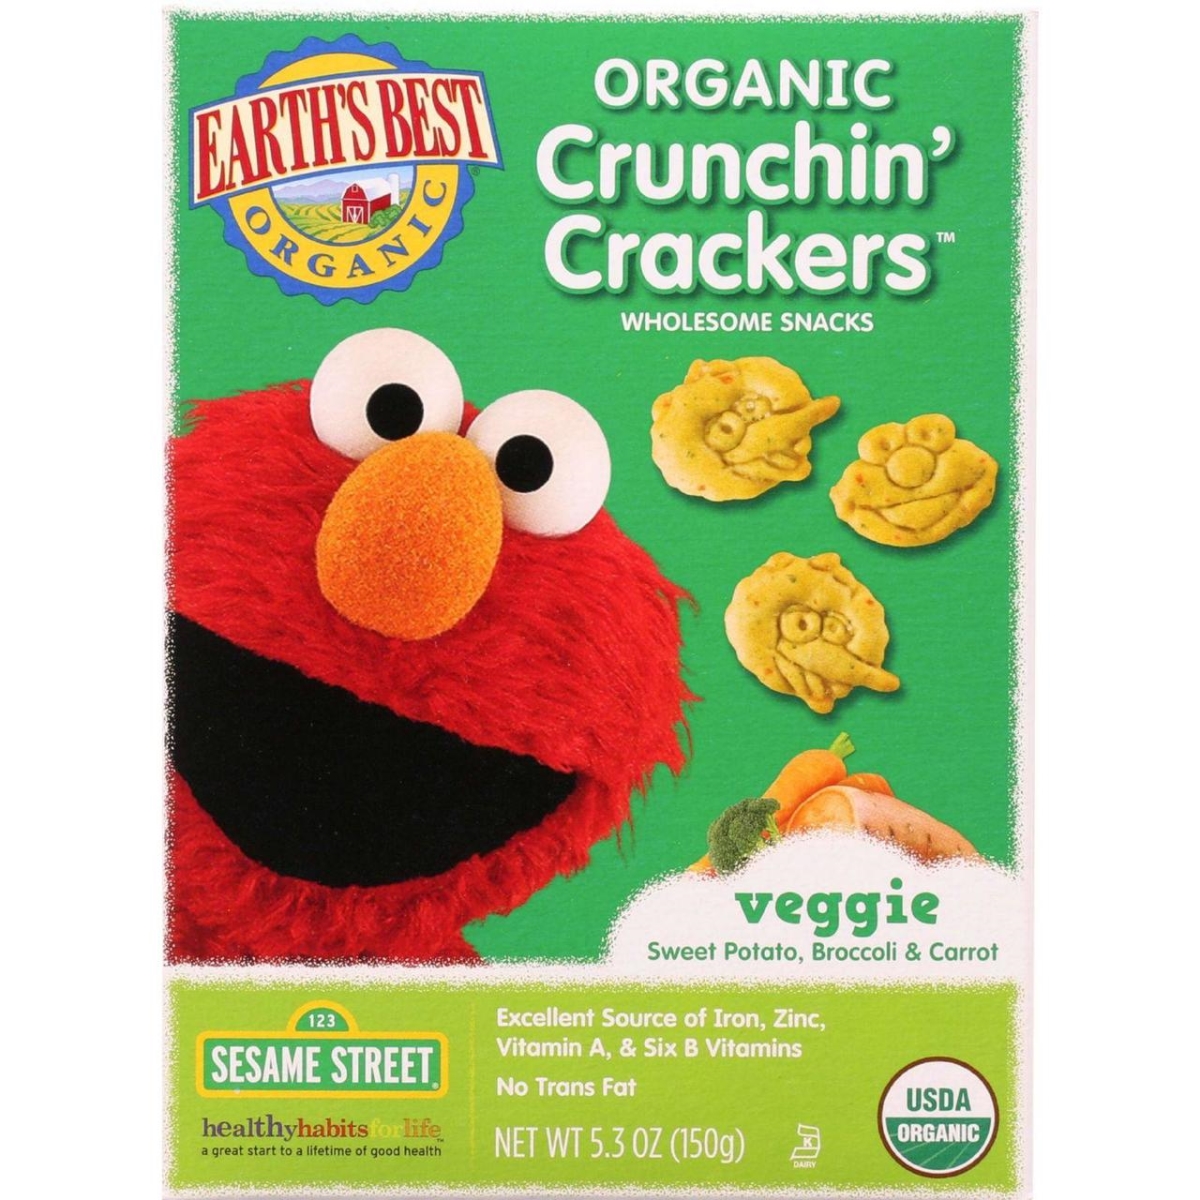 Hg1142033 5.3 Oz Organic Crunchin Crackers Veggie Snack, Case Of 6